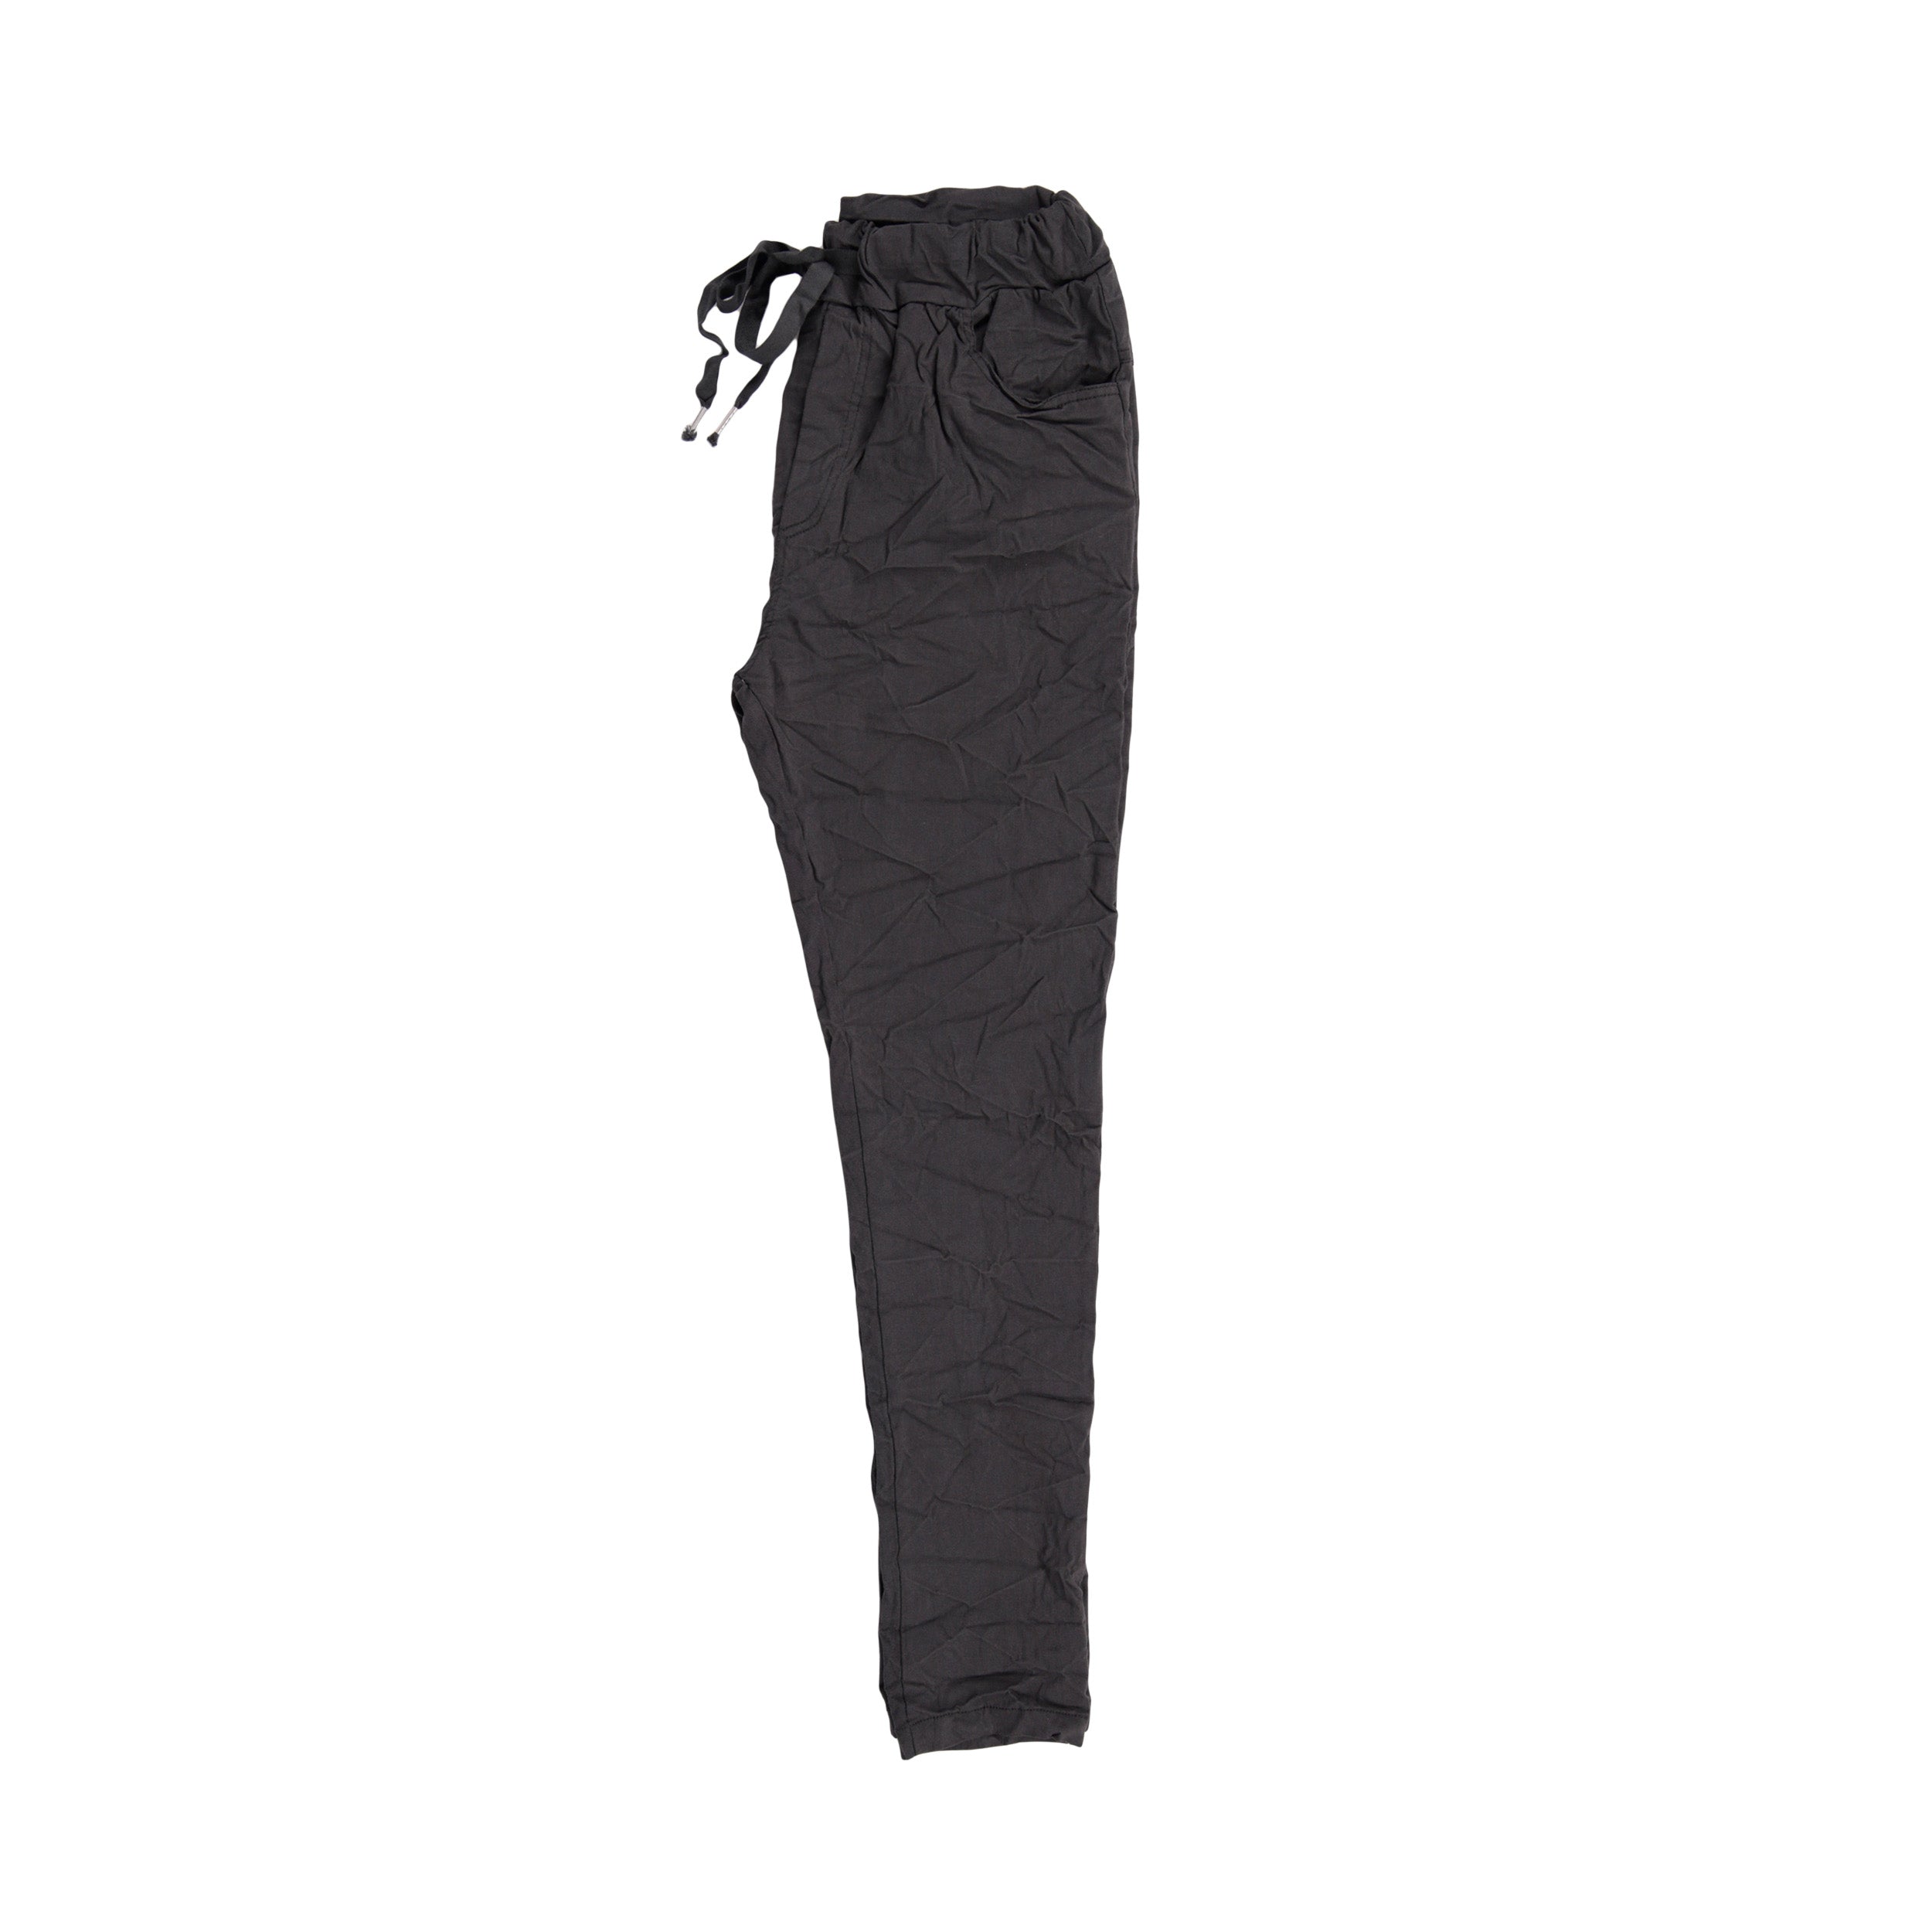 Nordbury Ladies Italian Stretch Plain Pants Magic Fit Trousers